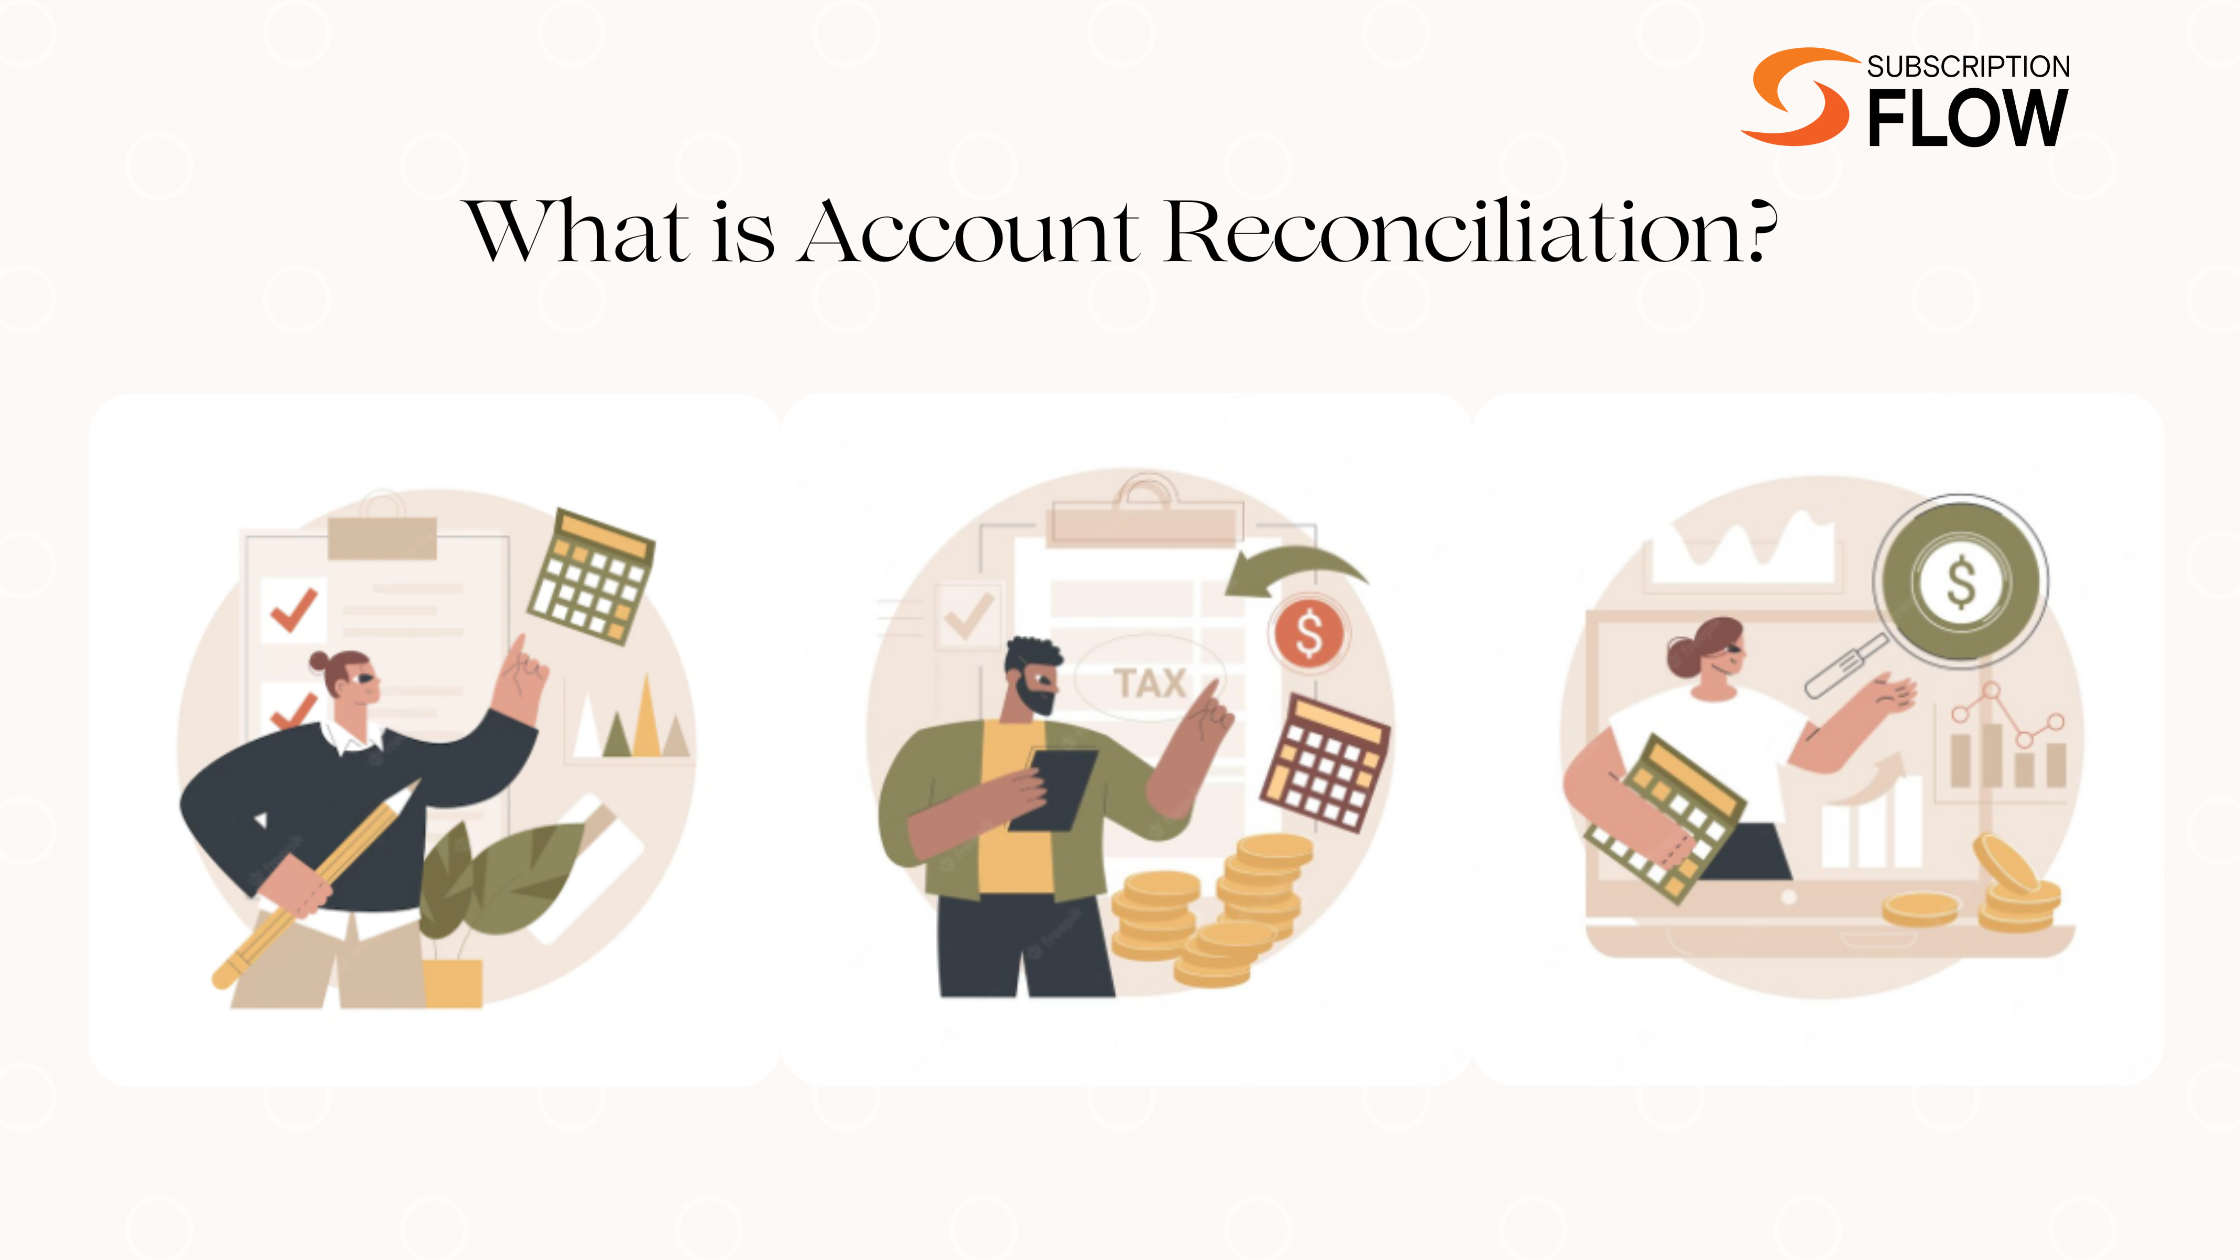 account reconciliation